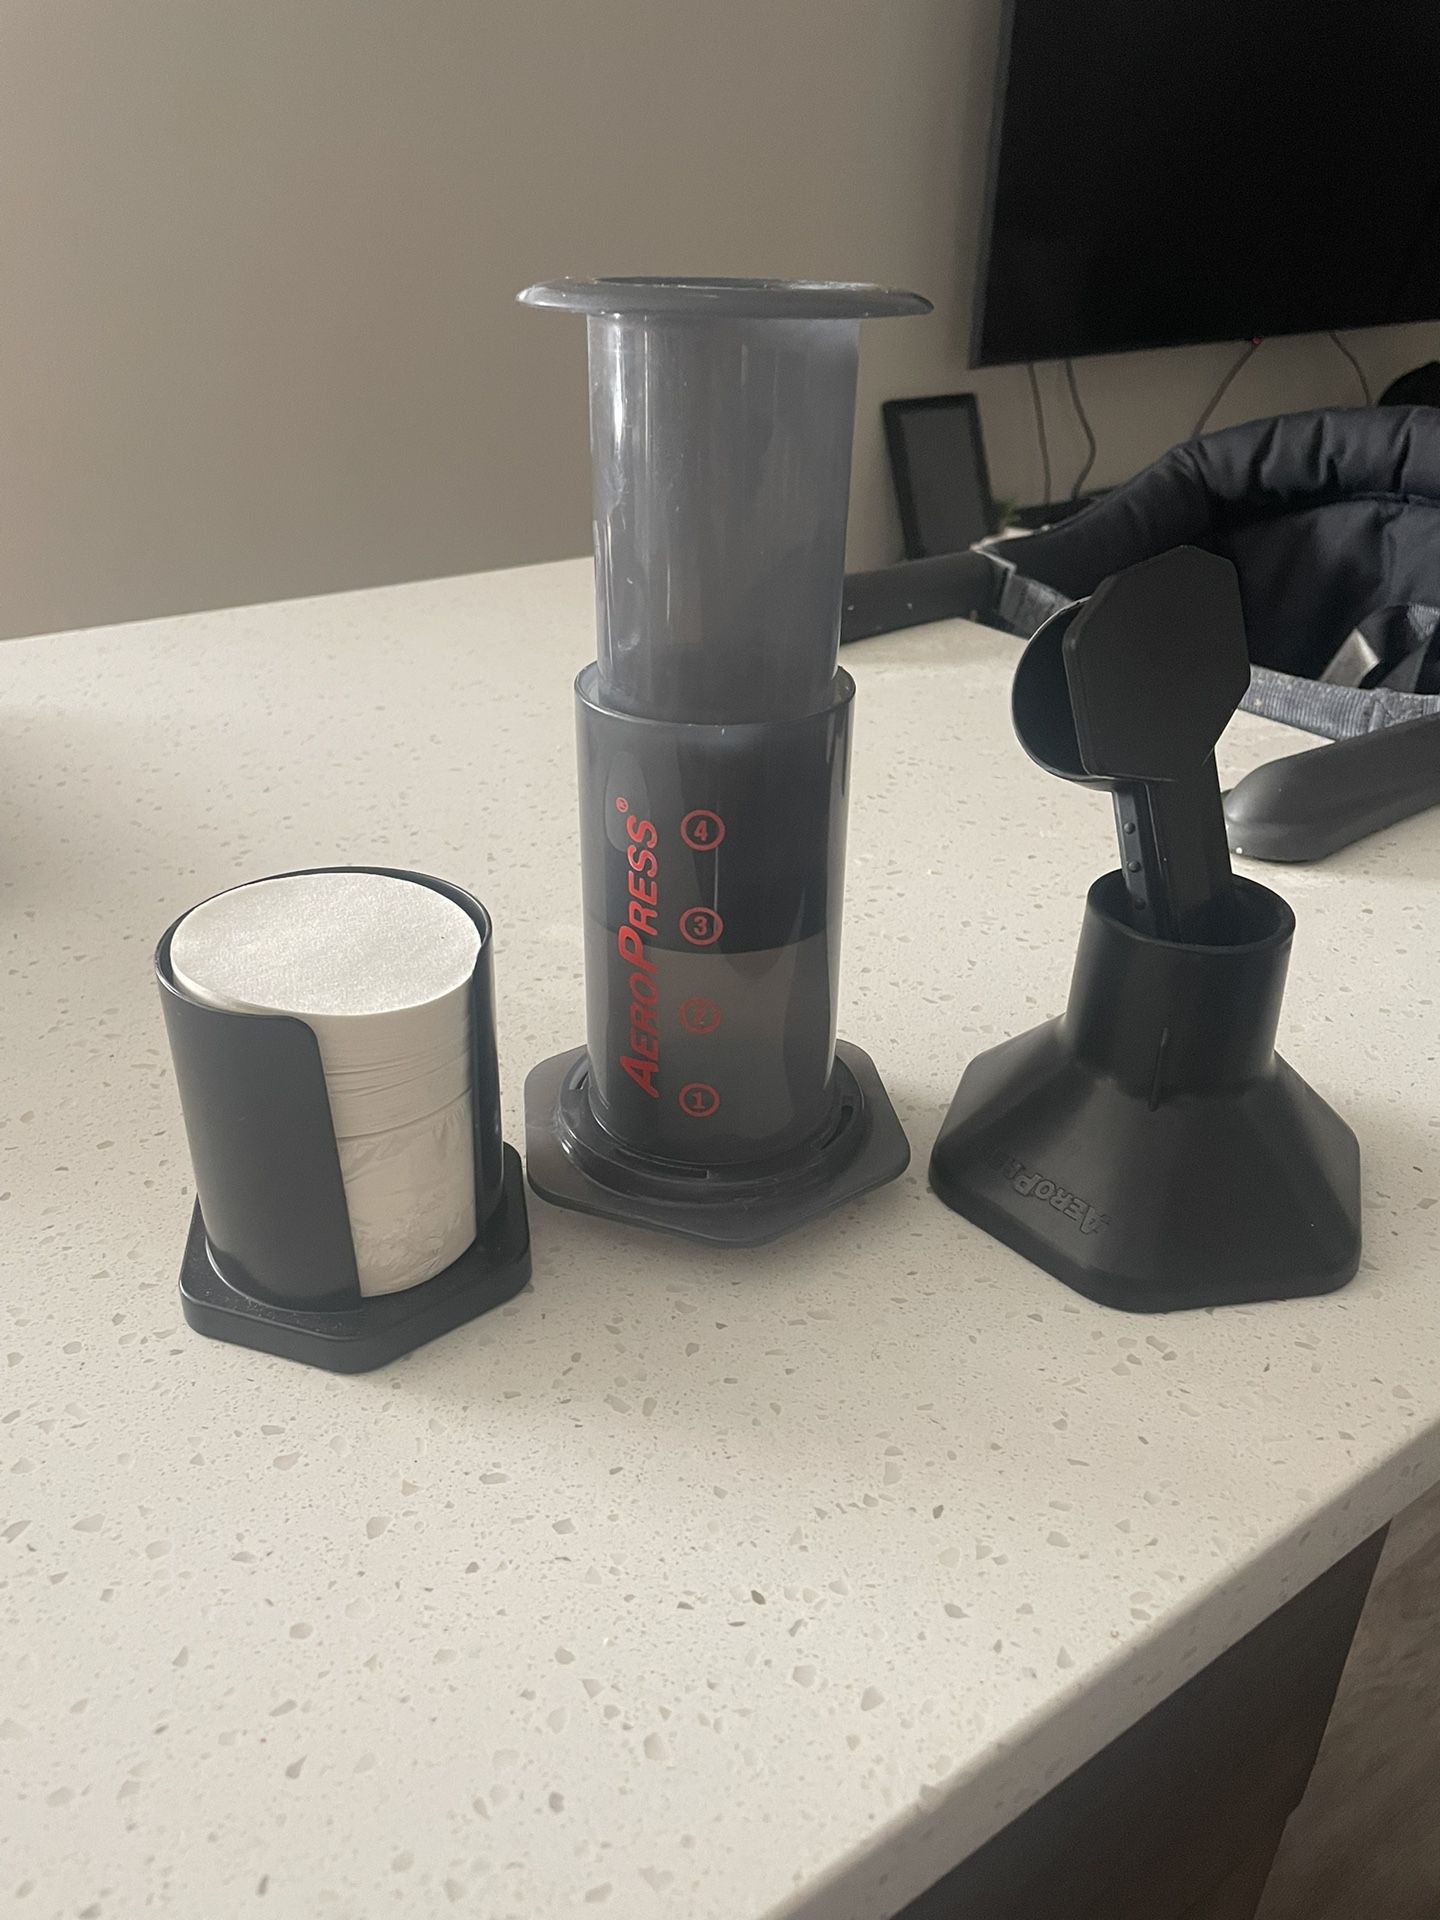 Aero press Coffee Maker